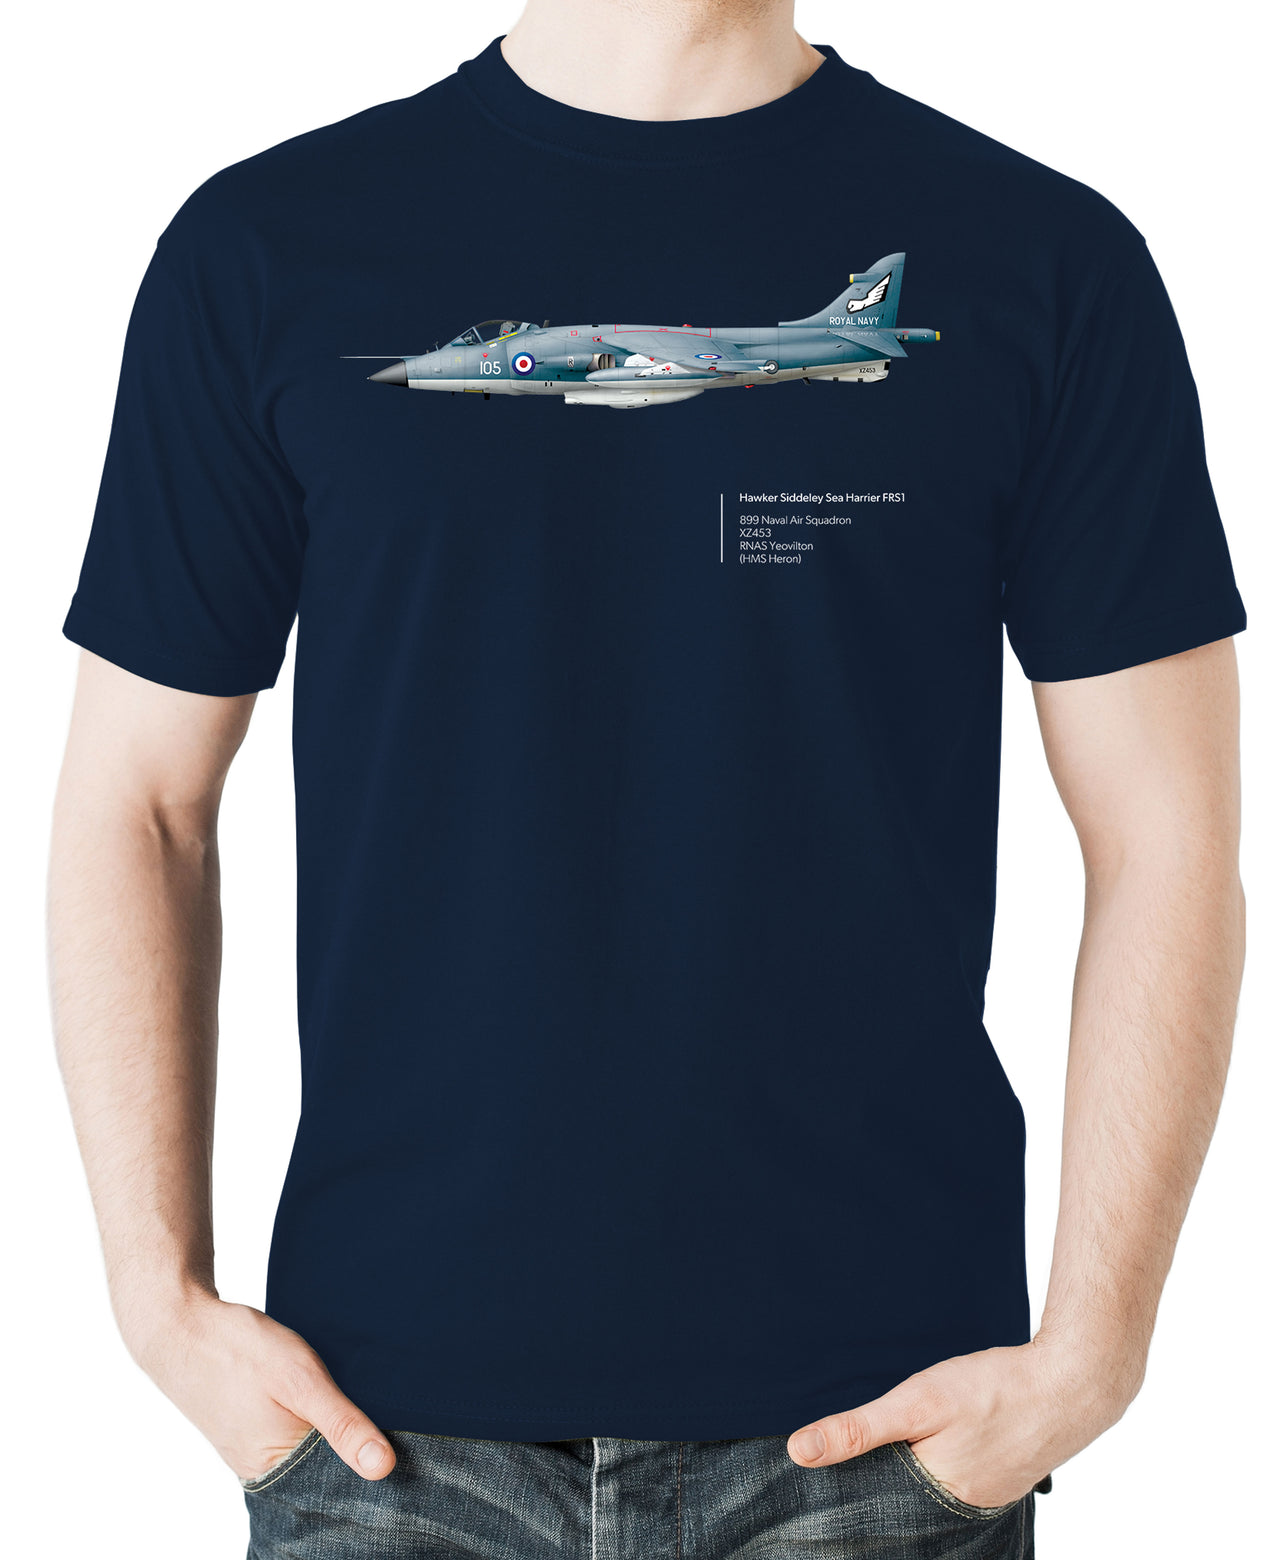 Sea Harrier 899 NAS - T-shirt